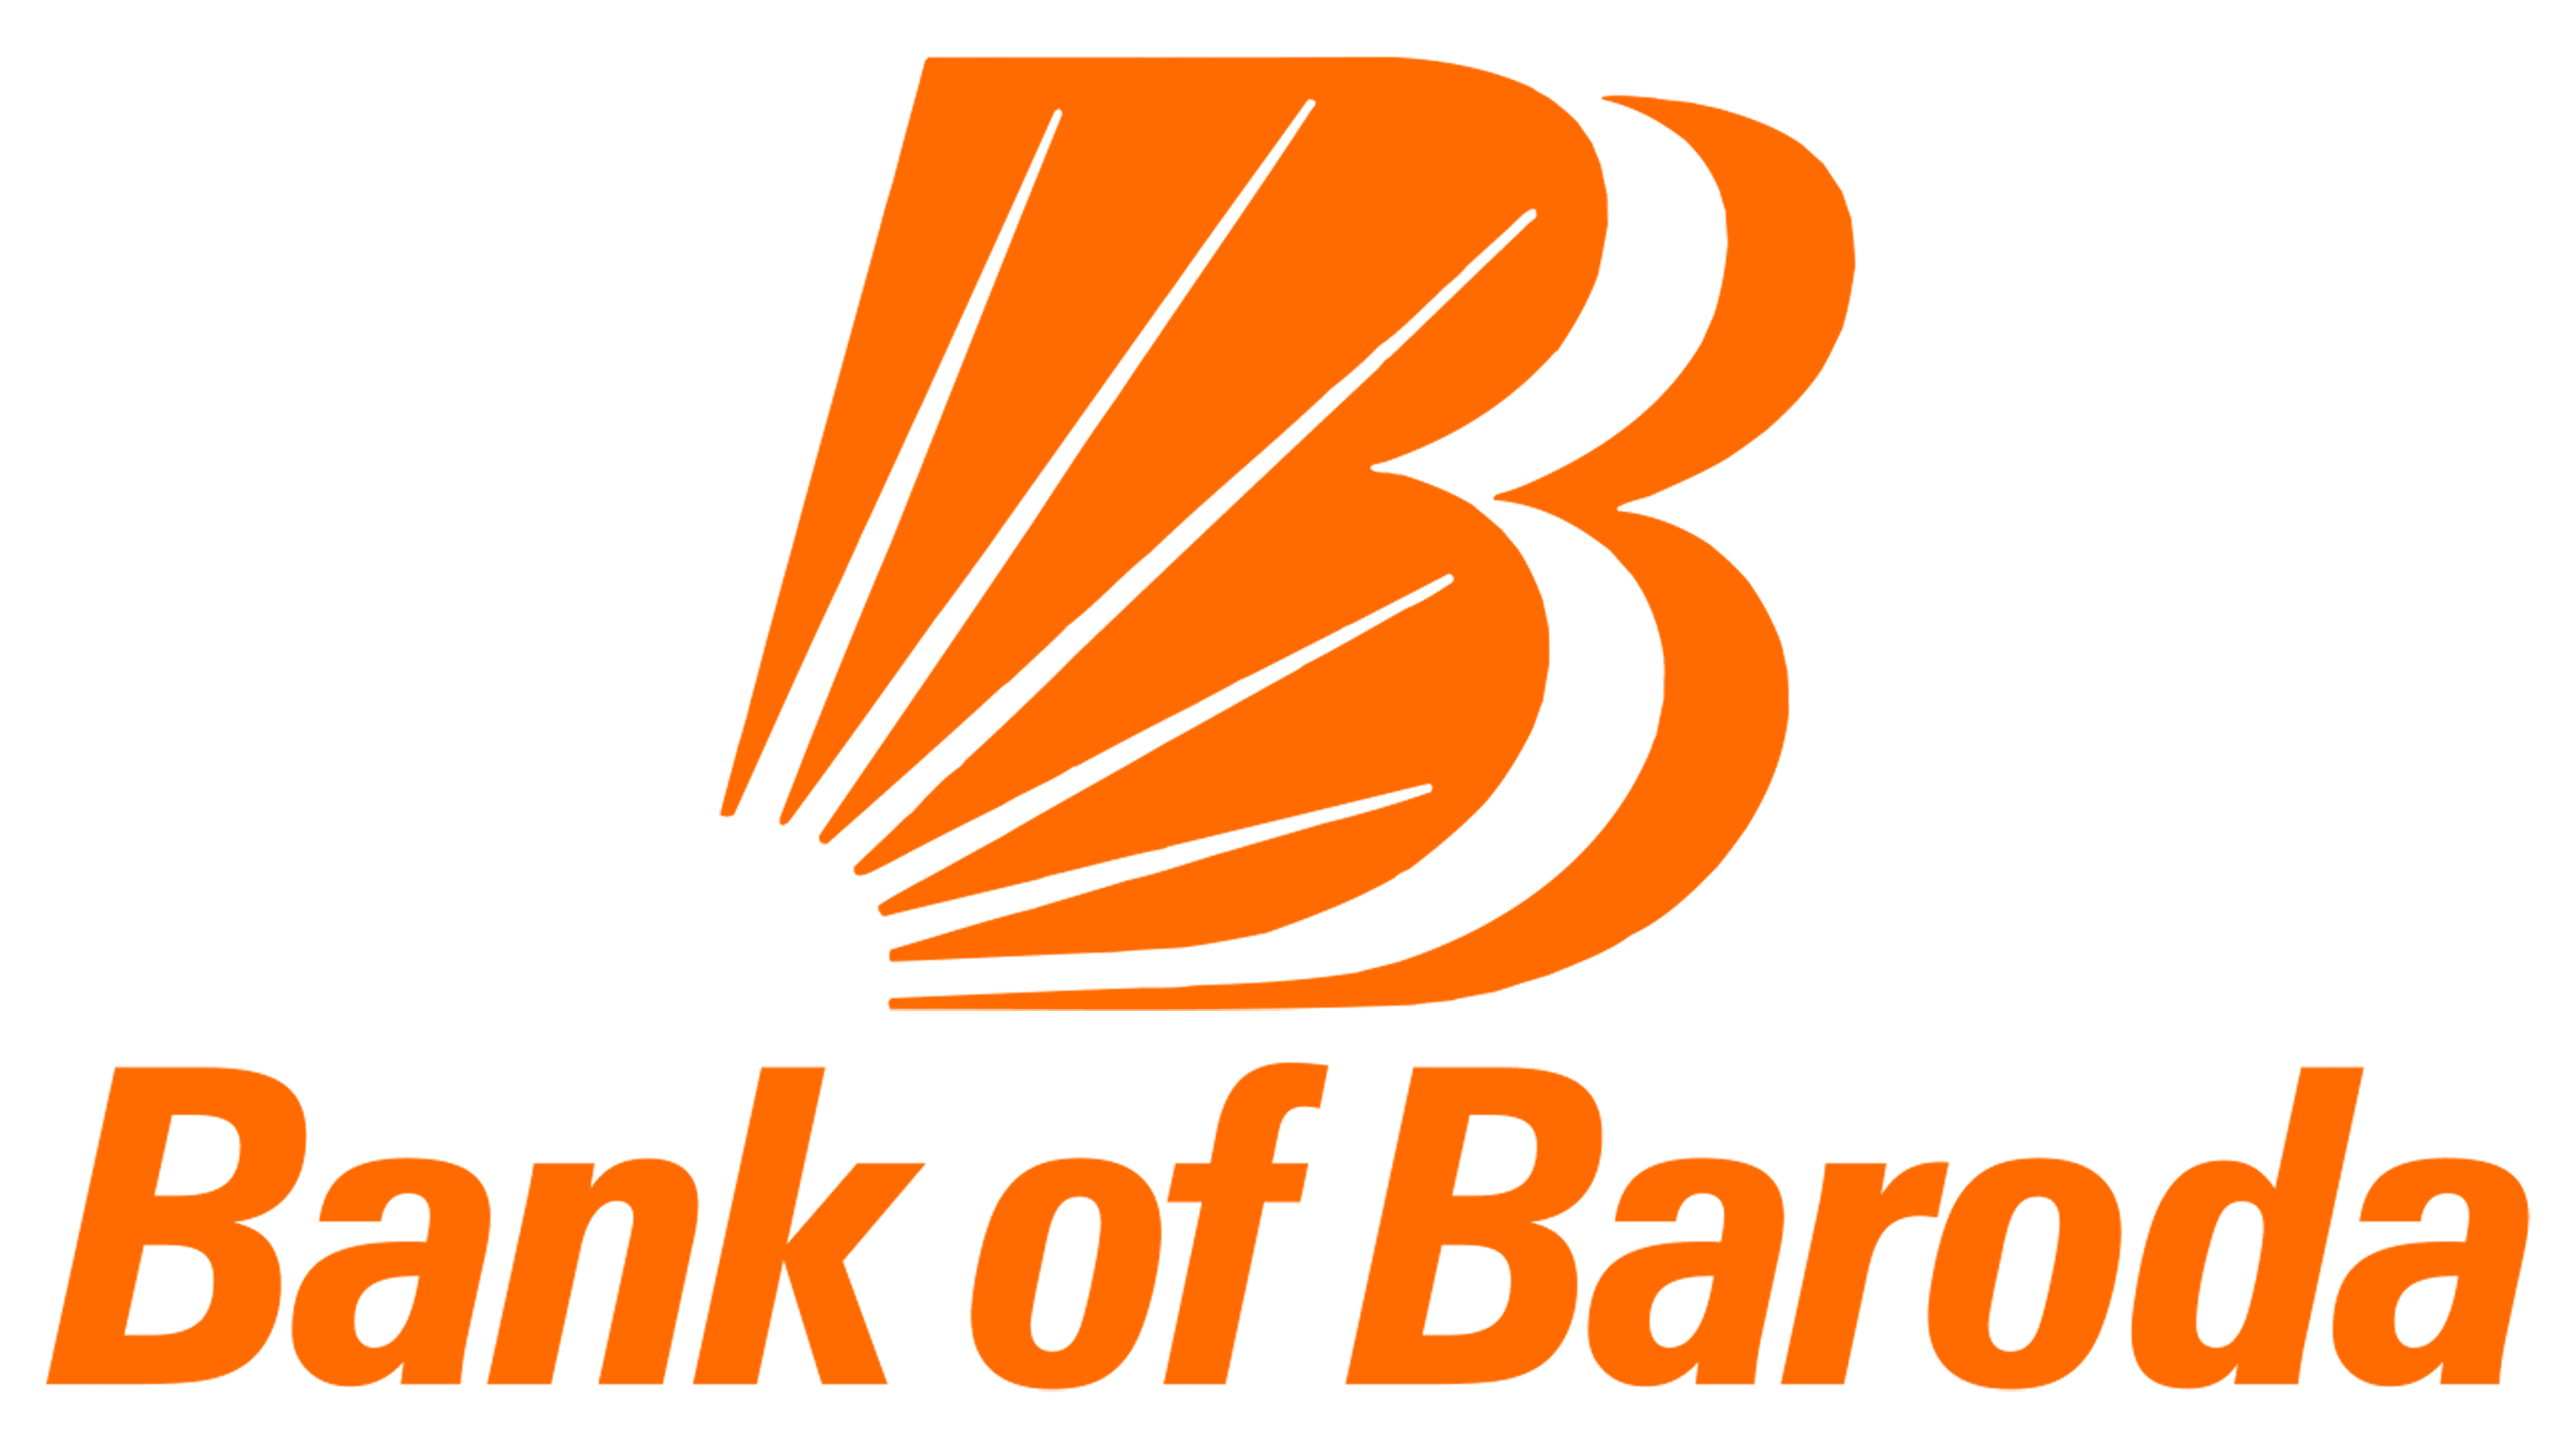 Bank of Baroda. Киви банк лого. Bank of Baroda logo PNG. Finca Bank лого. Der bank